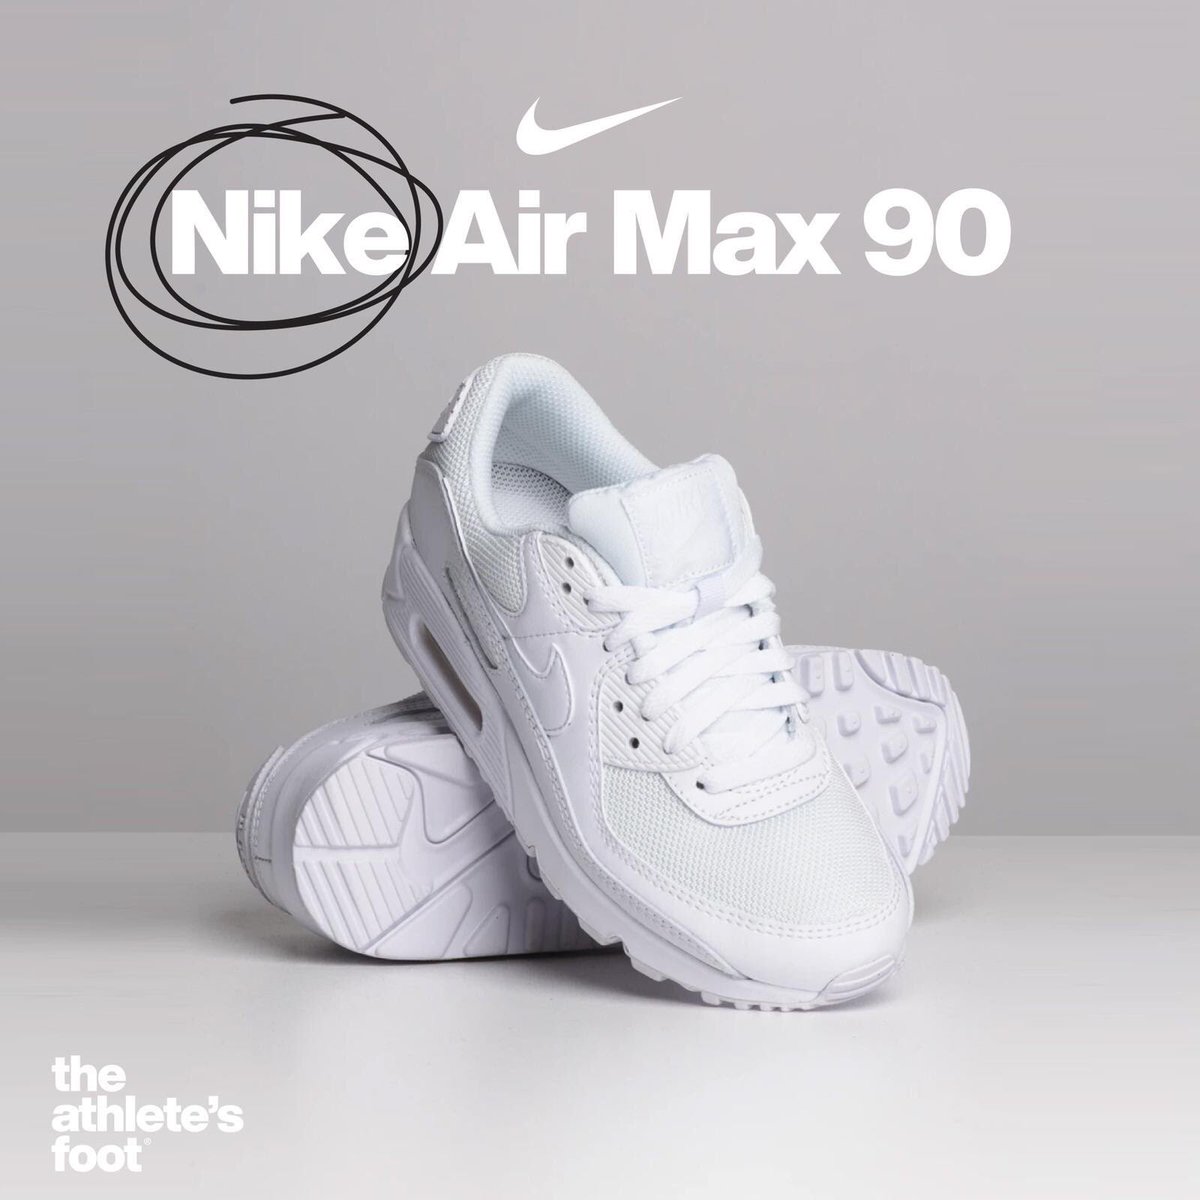 nike air max 90 athlete's foot